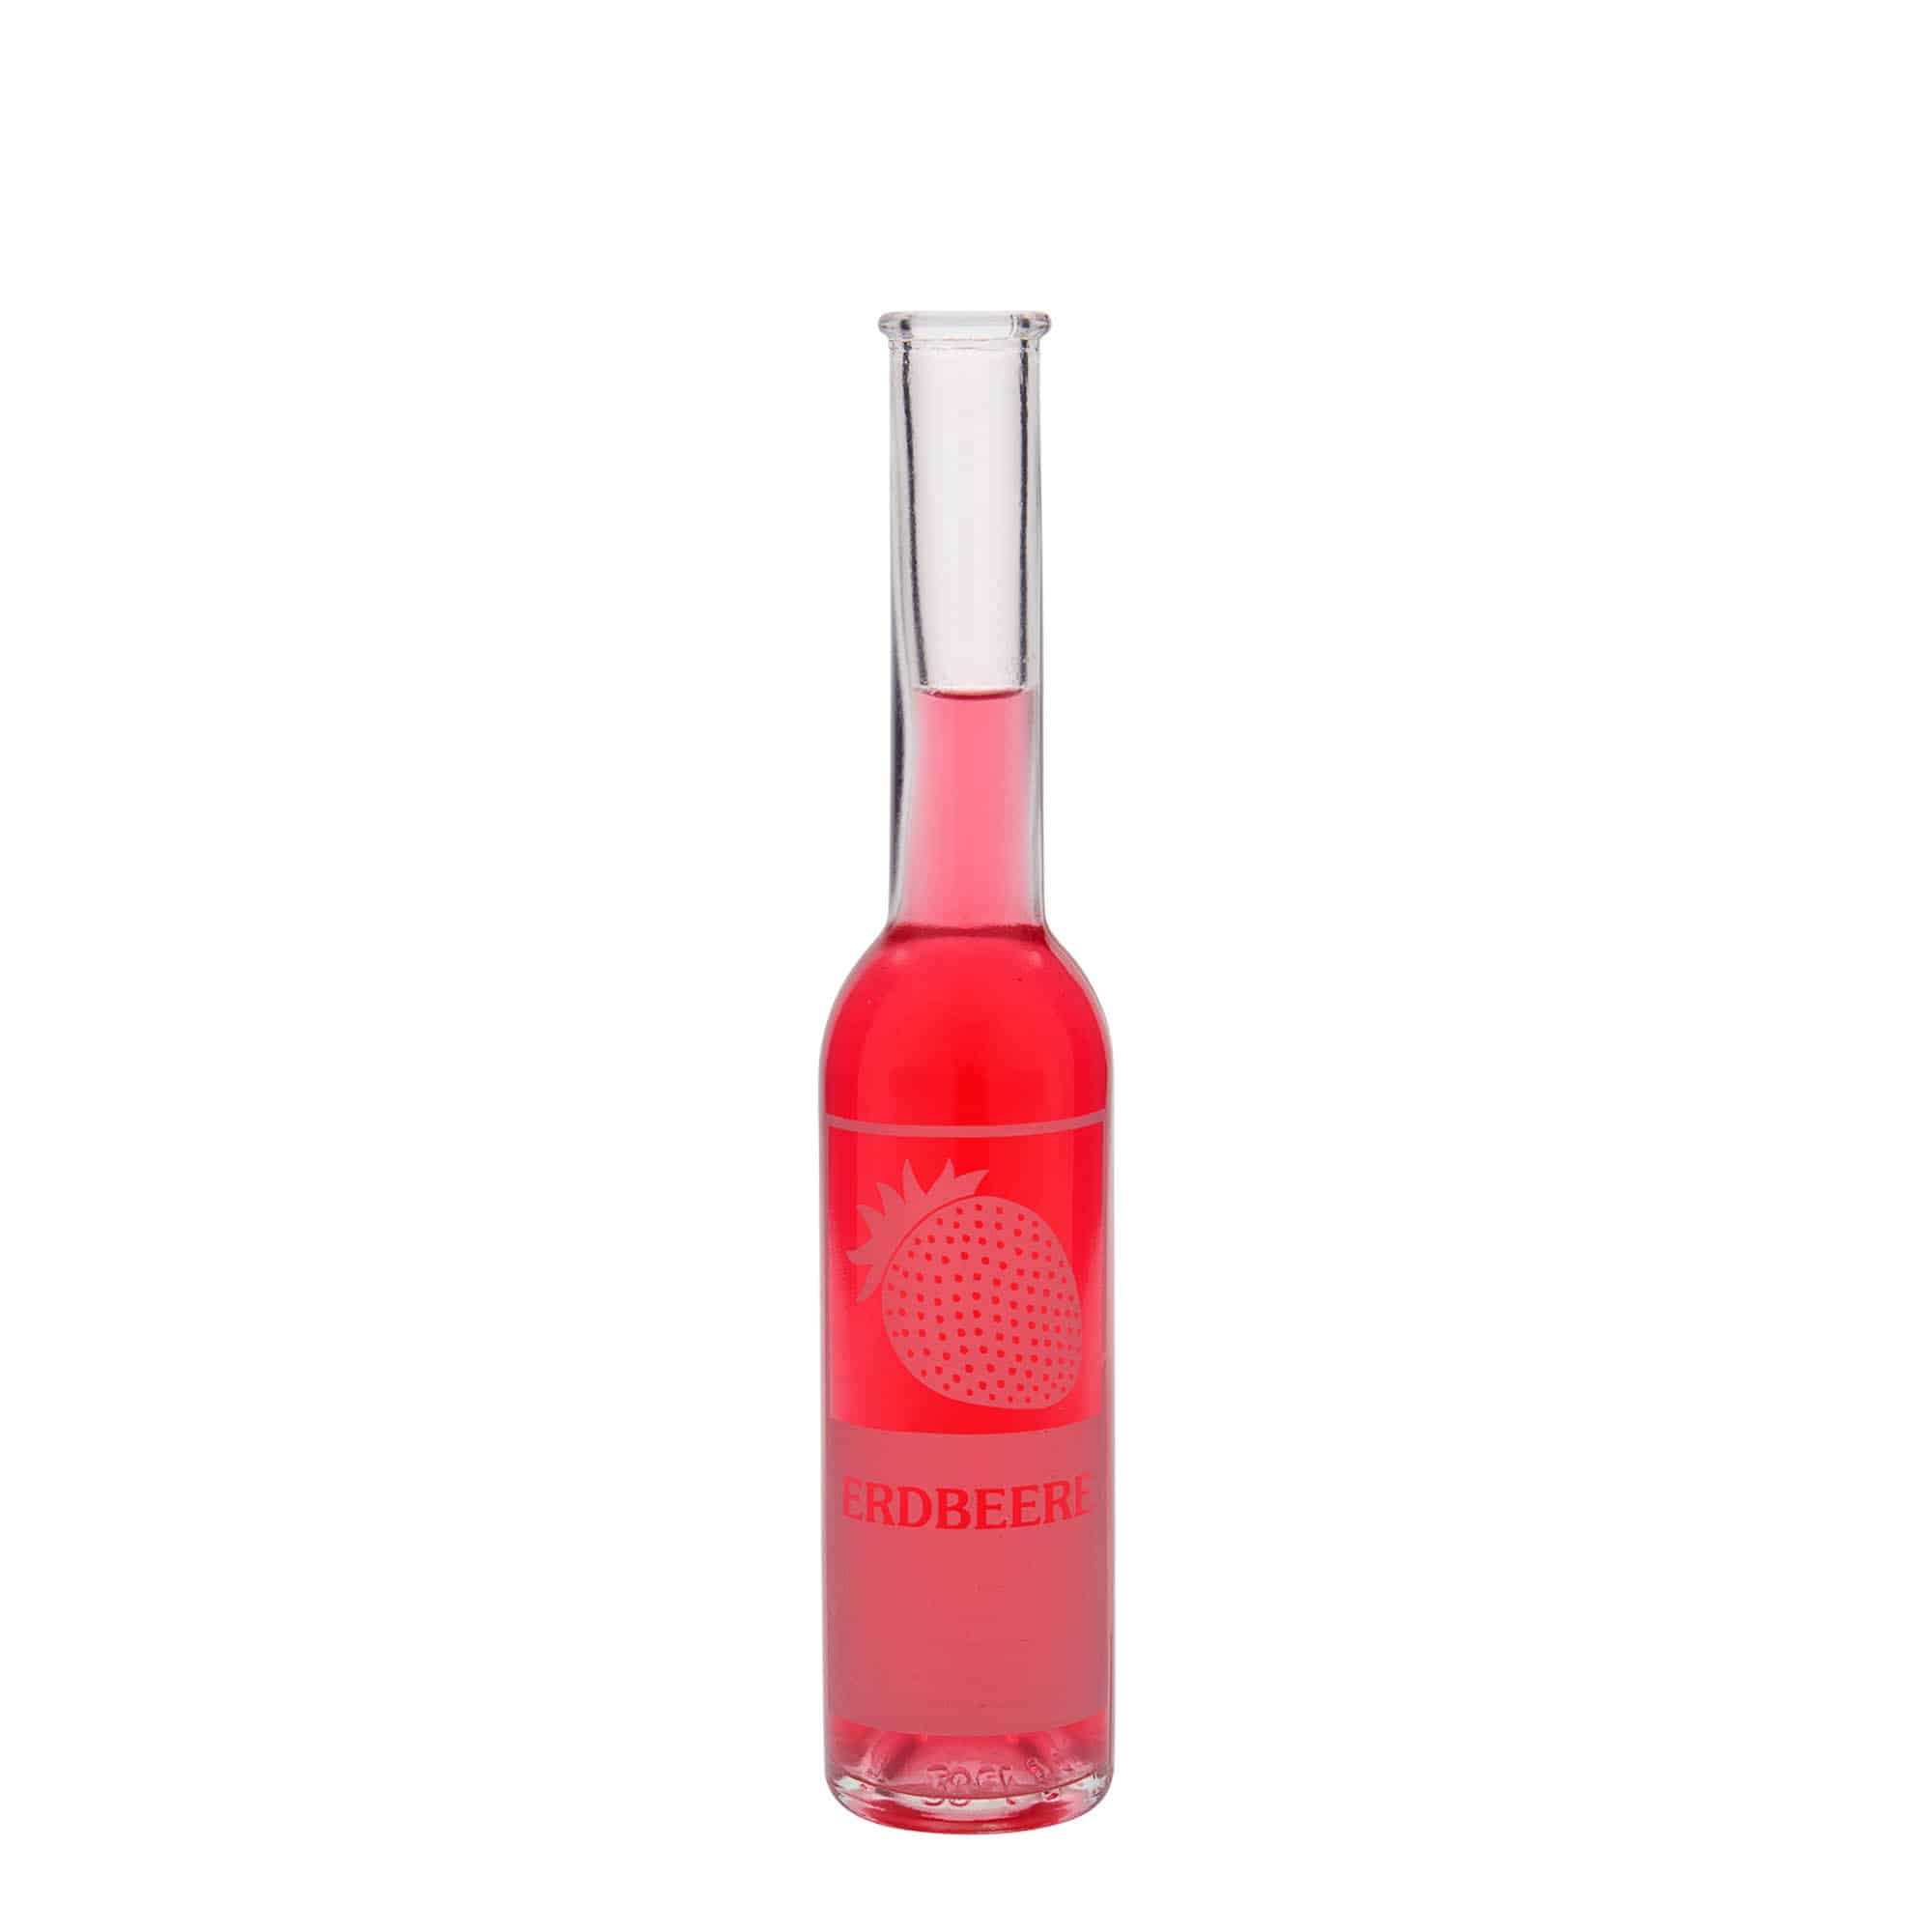 200 ml glass bottle 'Opera', print: “Erdbeere”, closure: cork